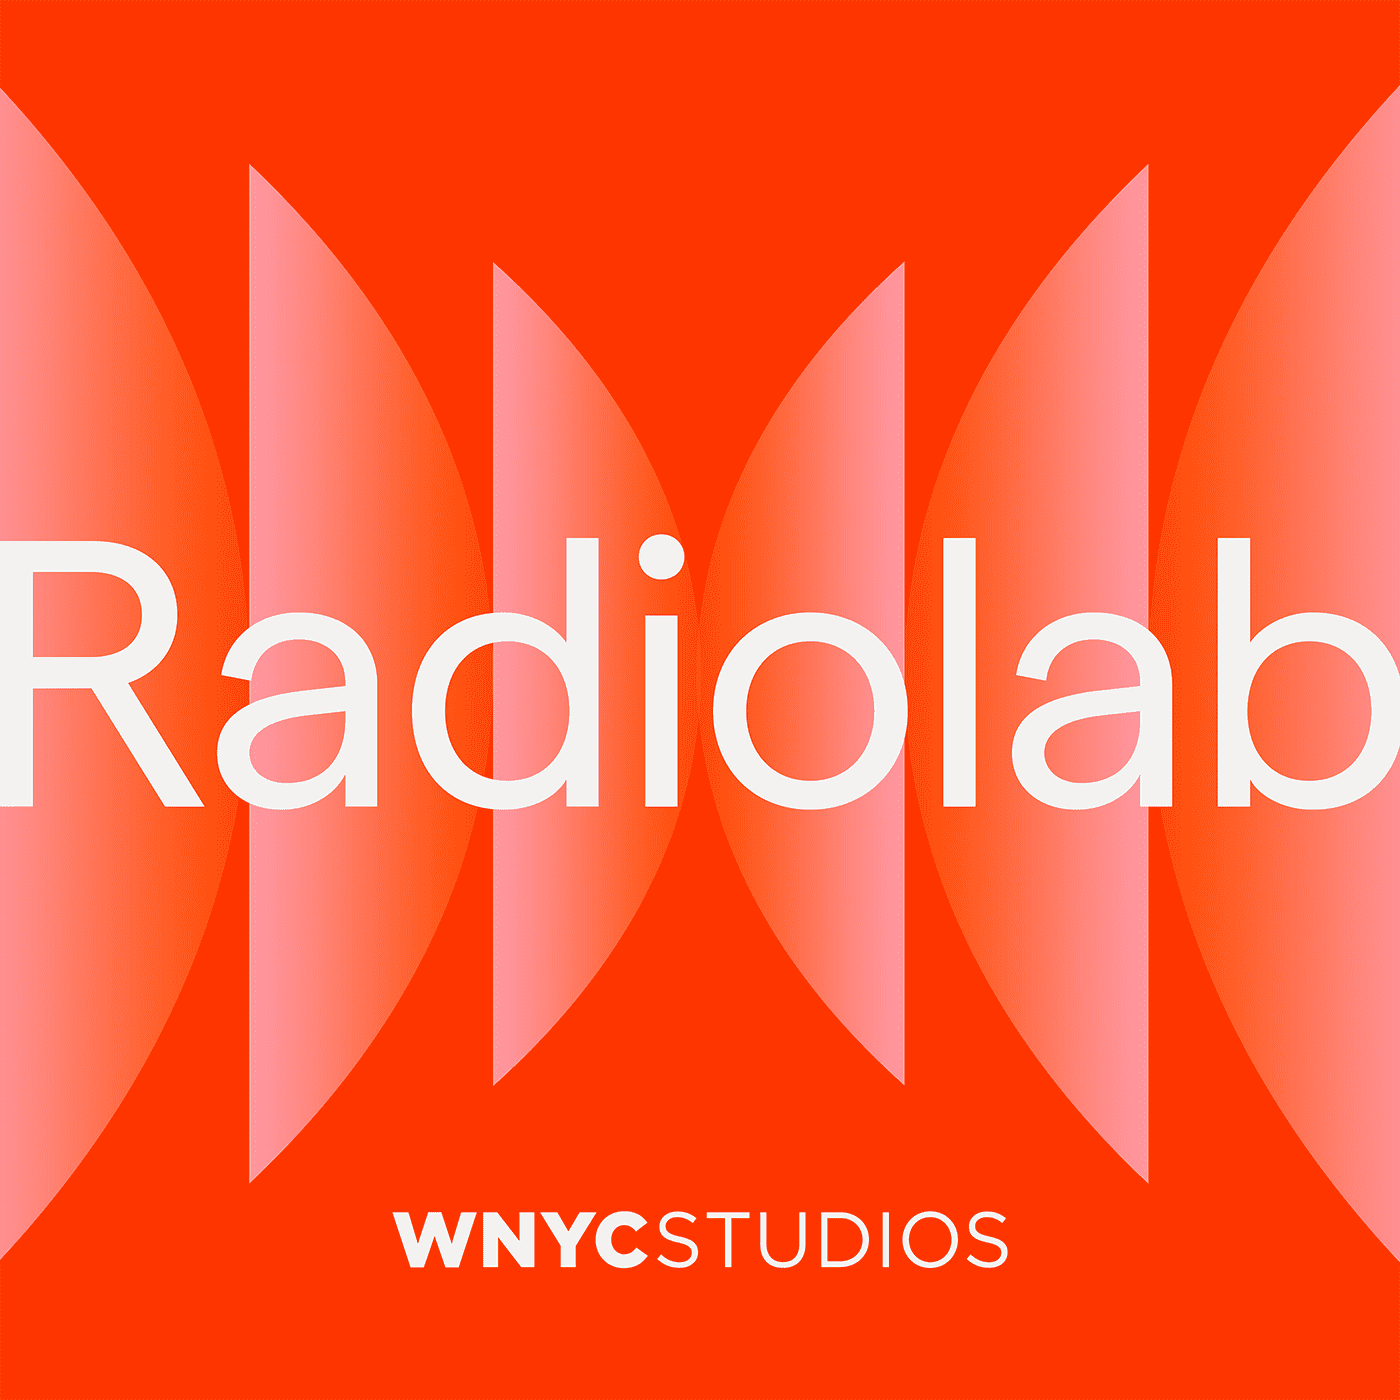 Radiolab:WNYC Studios (wnycdigital@gmail.com)